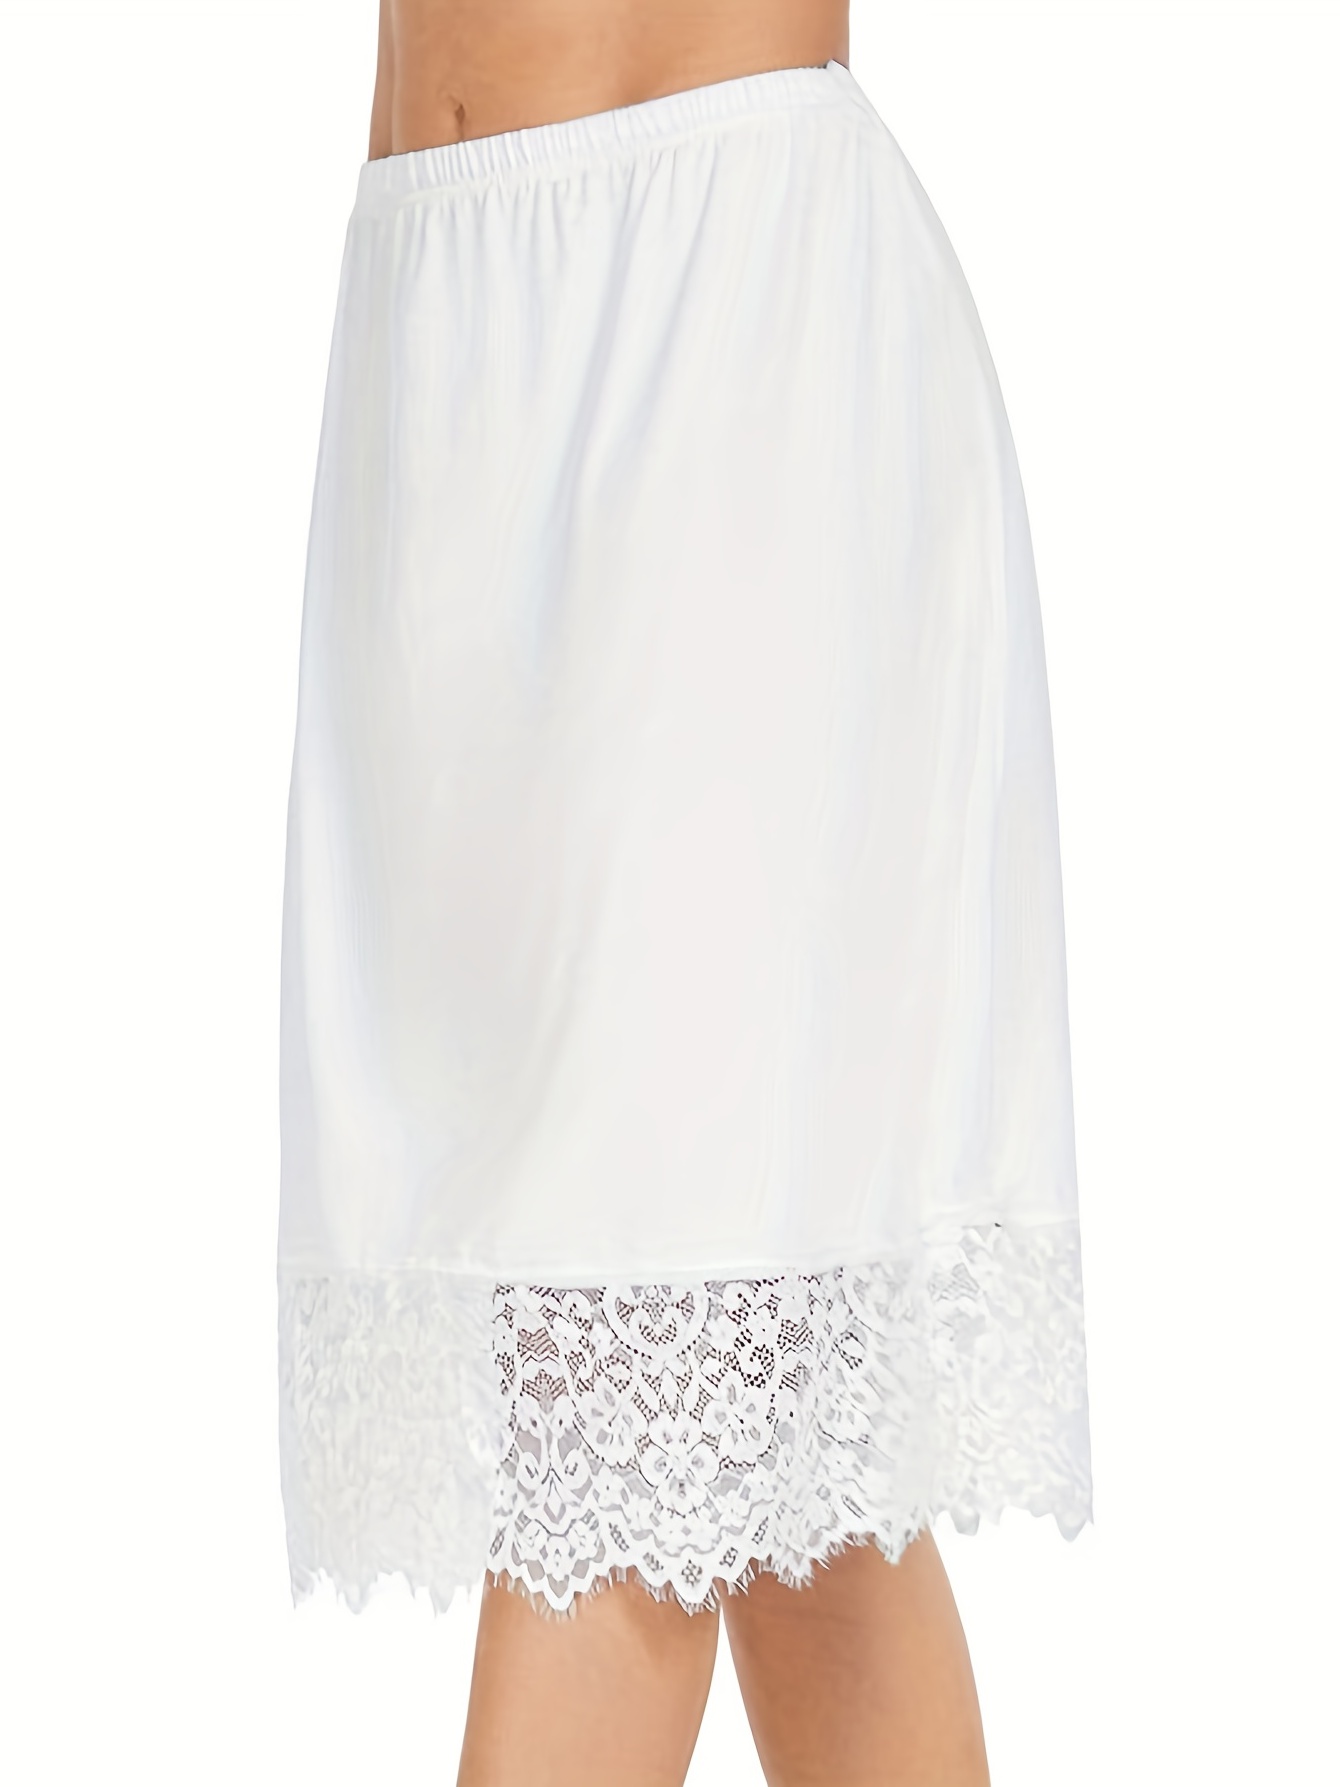 Foral Lace Trim Solid Skirt Side Split Stretch Half Slips Petticoat ...